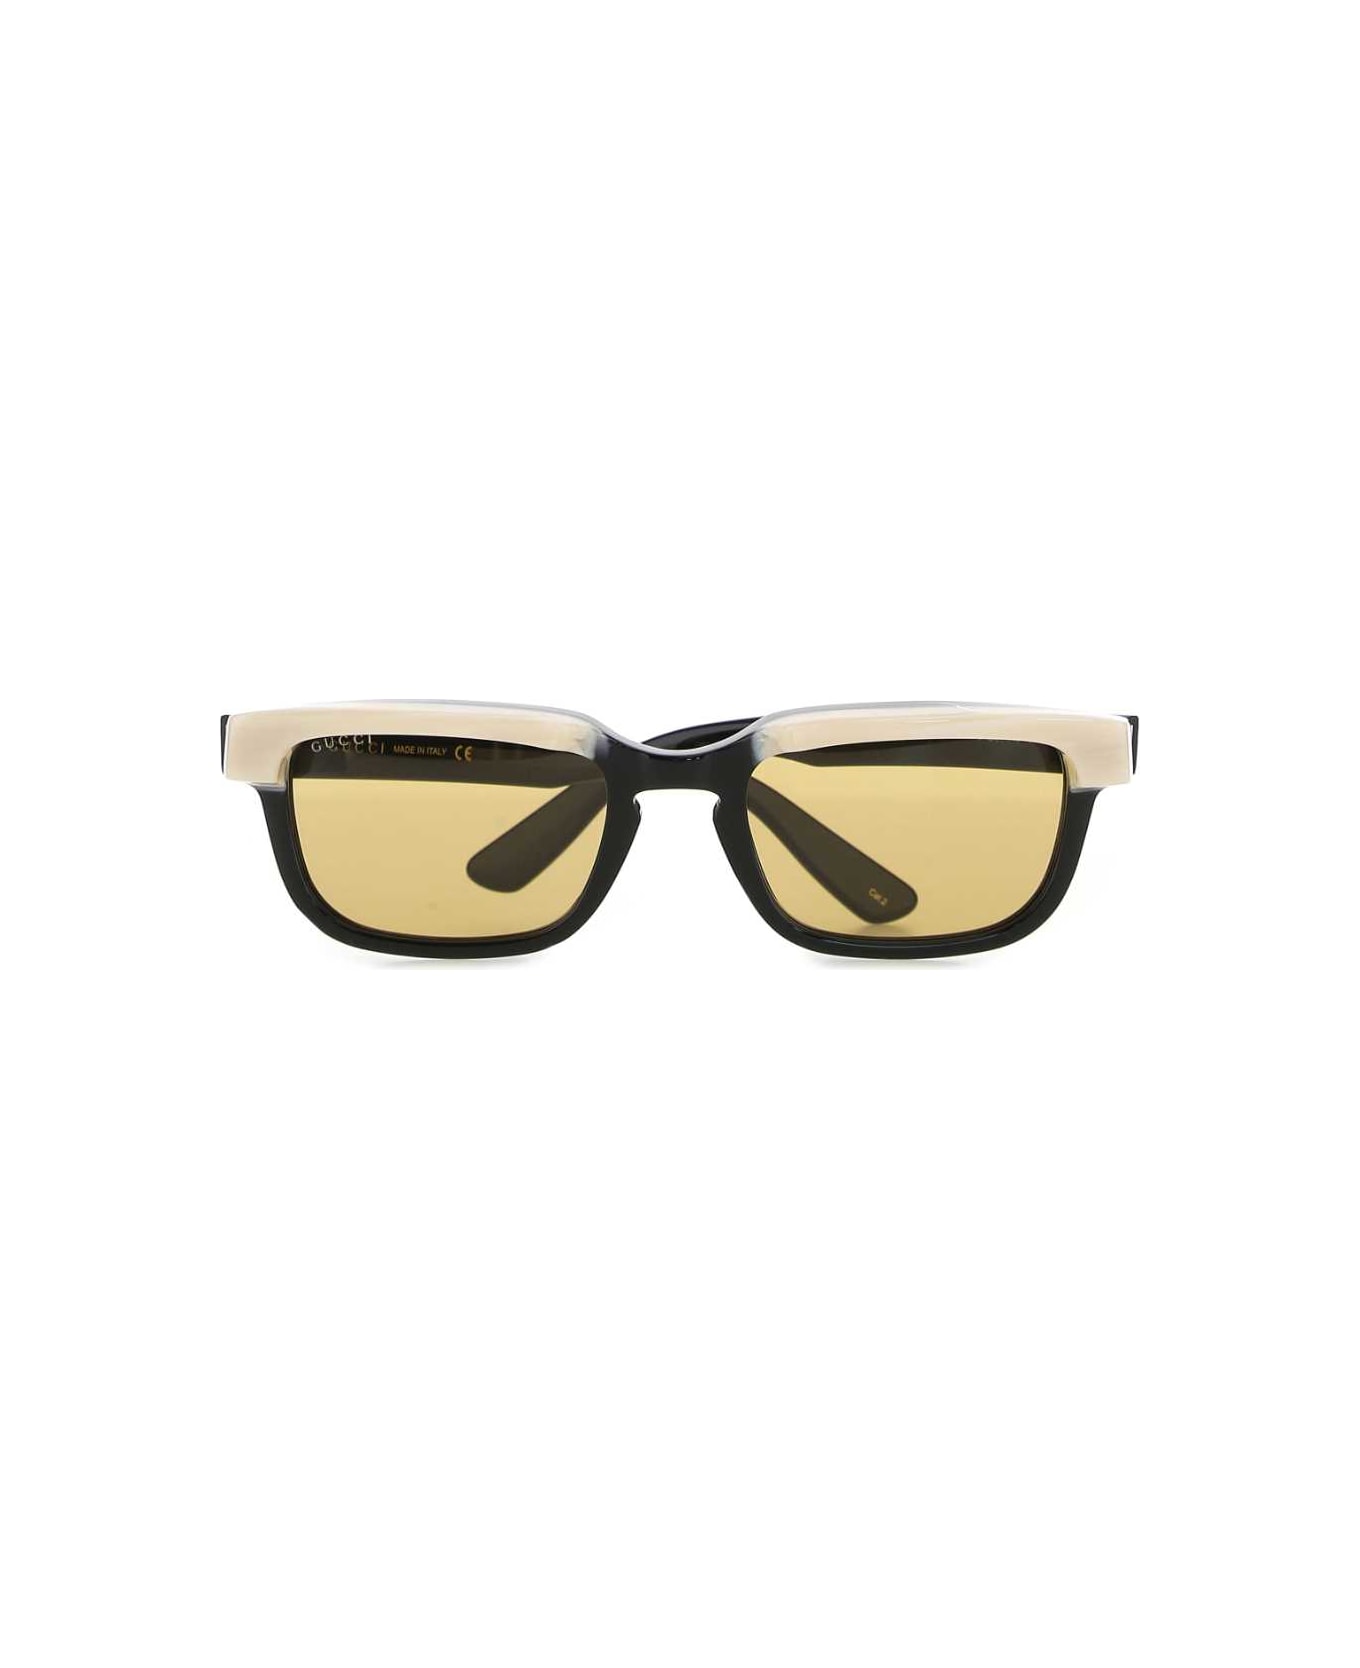 Gucci Black Acetate Sunglasses - 1070 サングラス